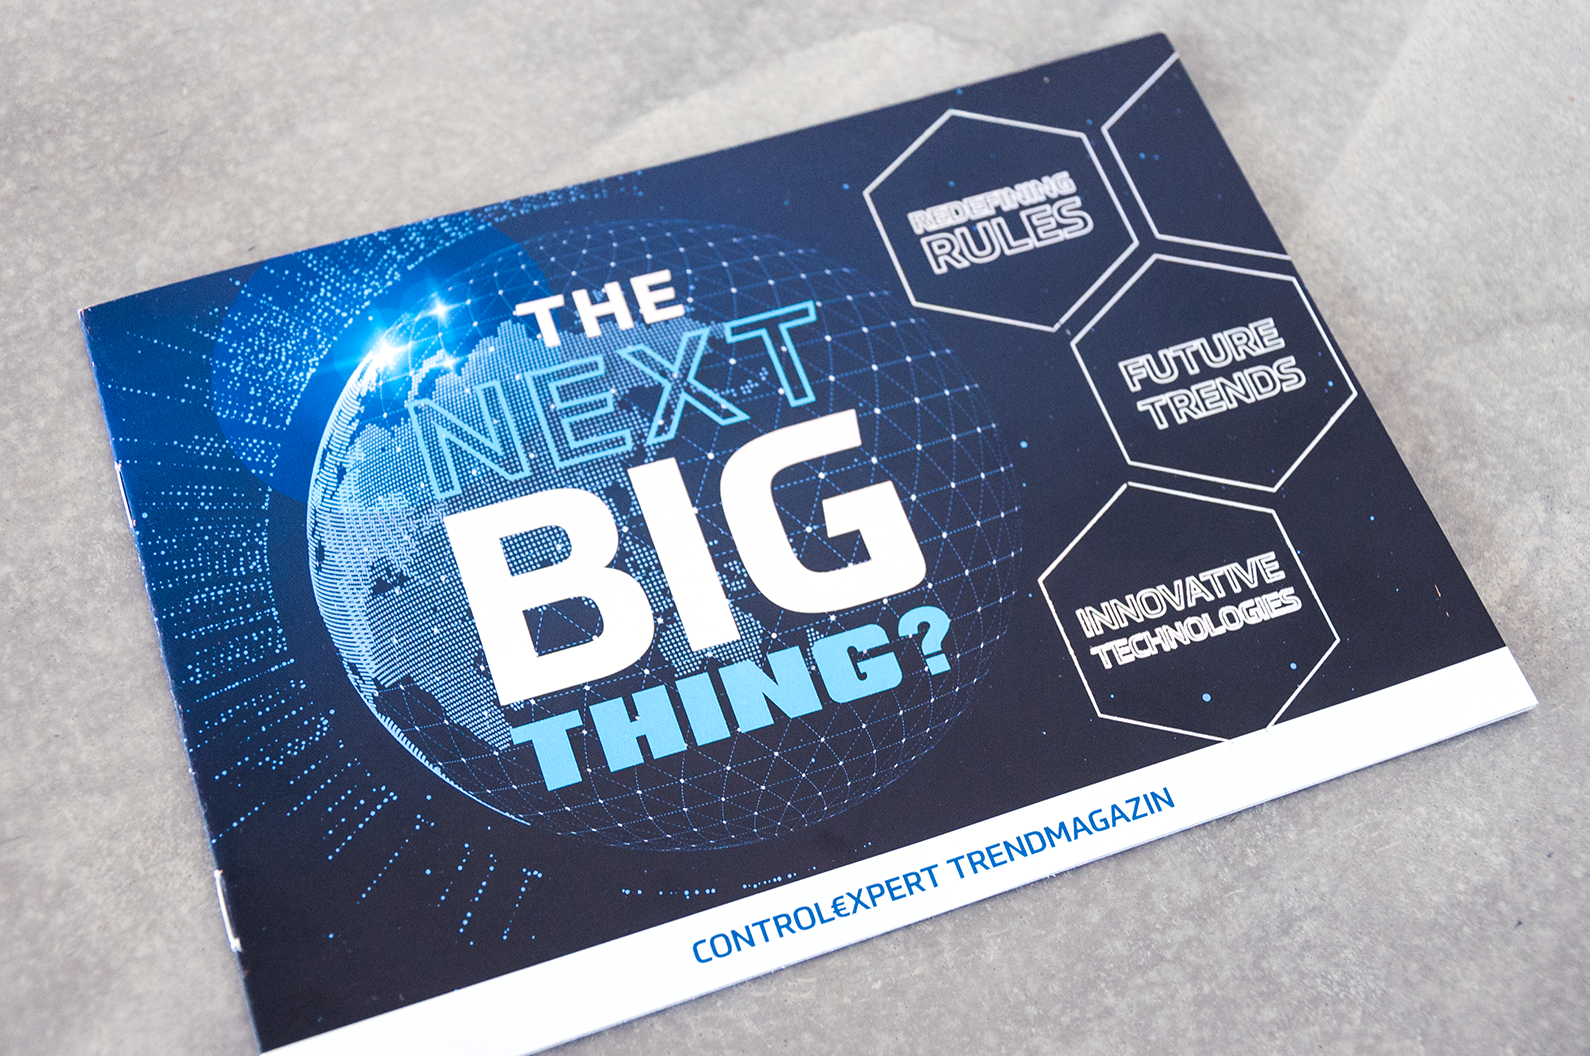 THE Next Big THING – Broschüre für Control€xpert